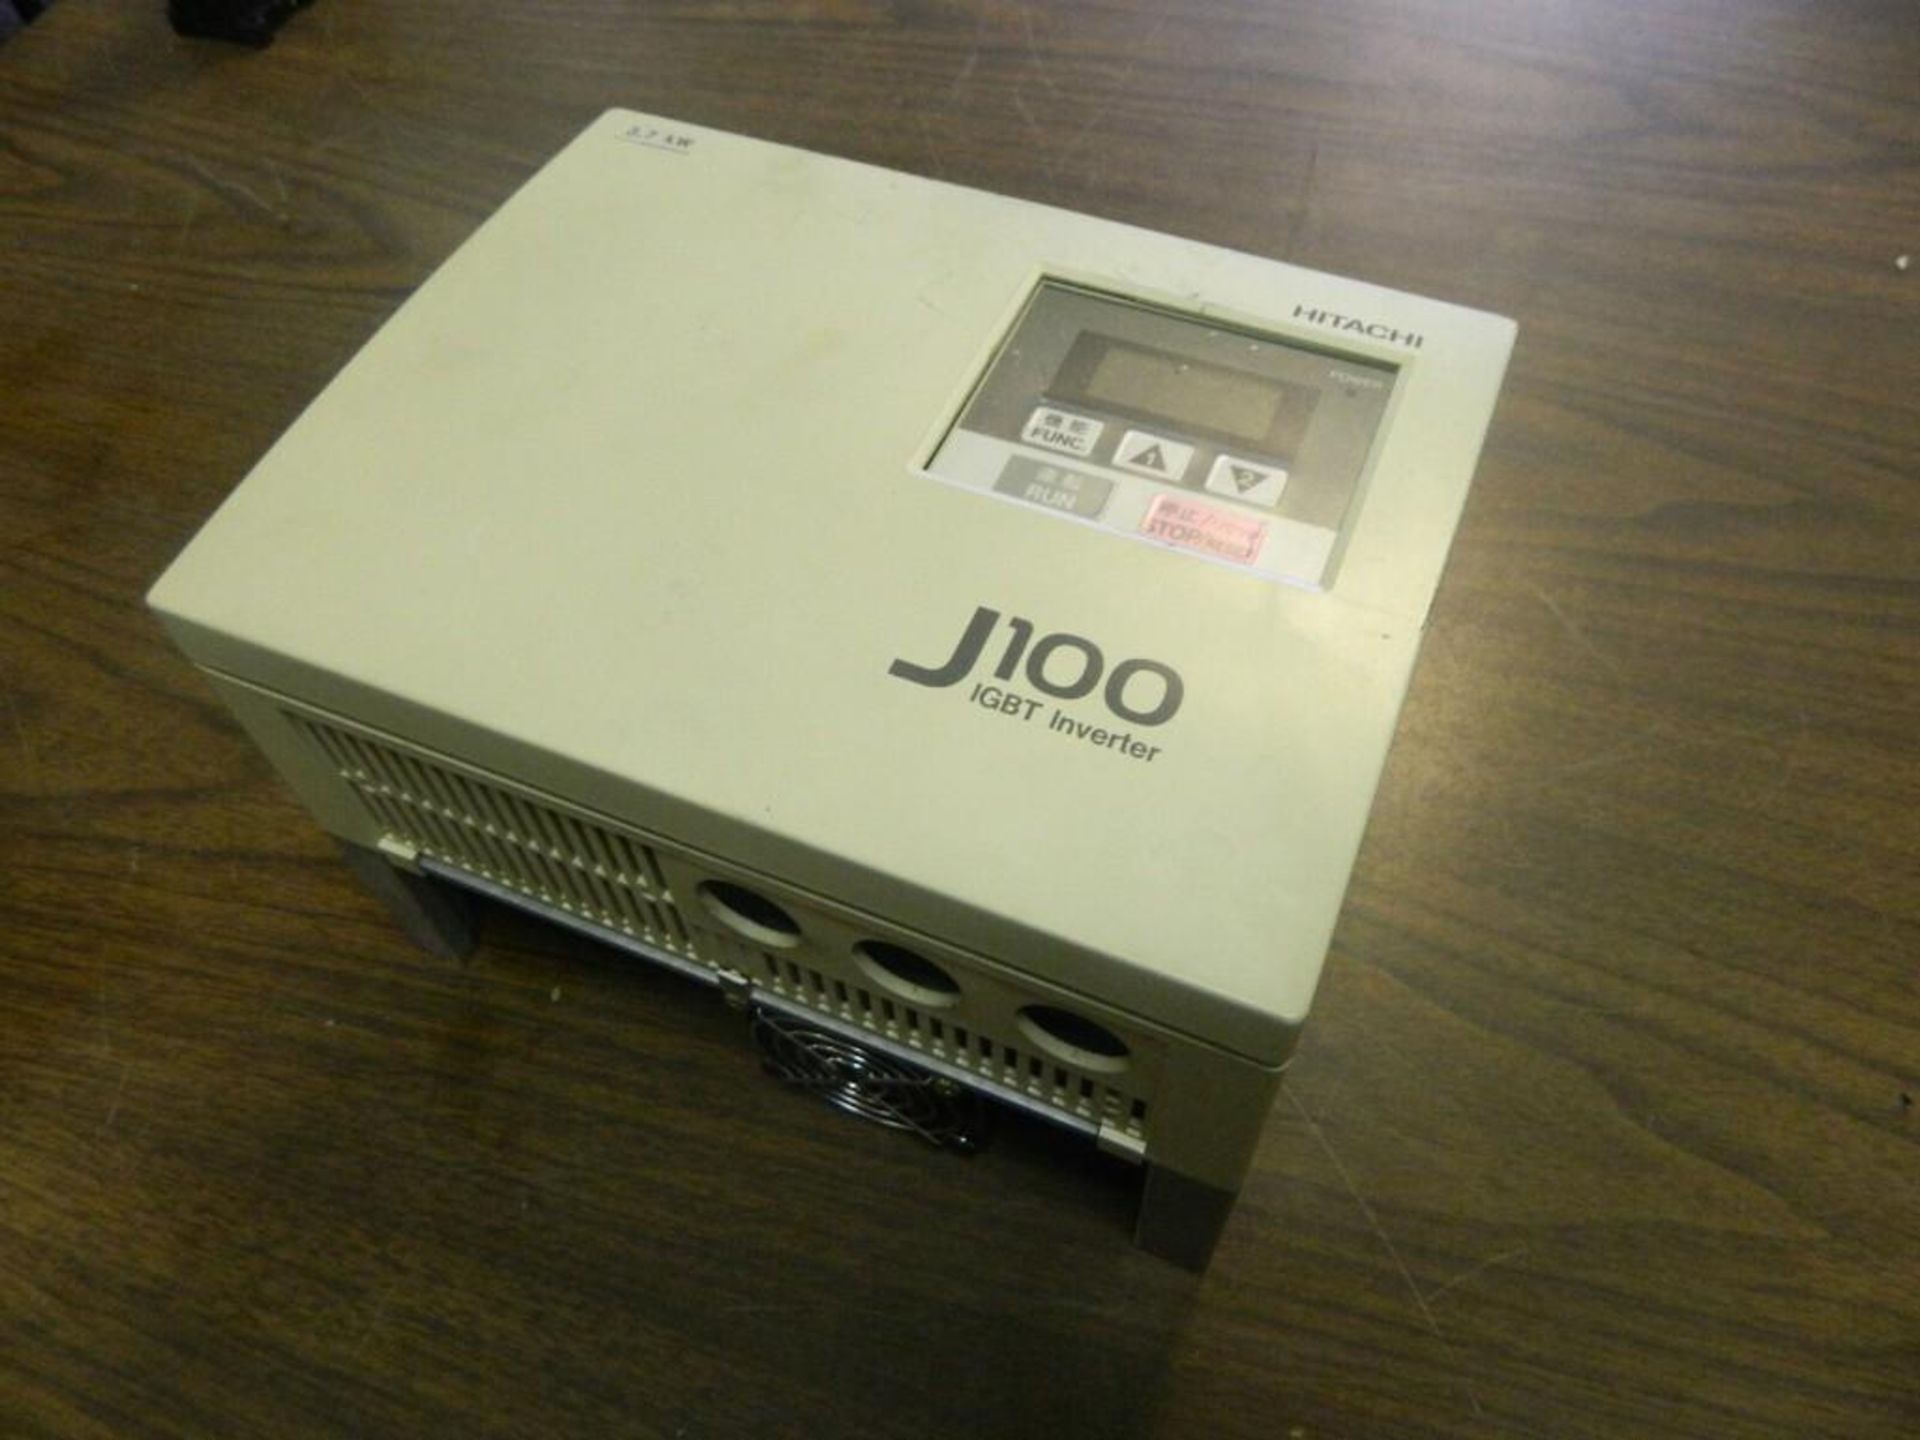 Hitachi J100 IGBT Inverter, 3.7 kW, 400-460V, 60 Hz, J100 037HFE - Image 2 of 3